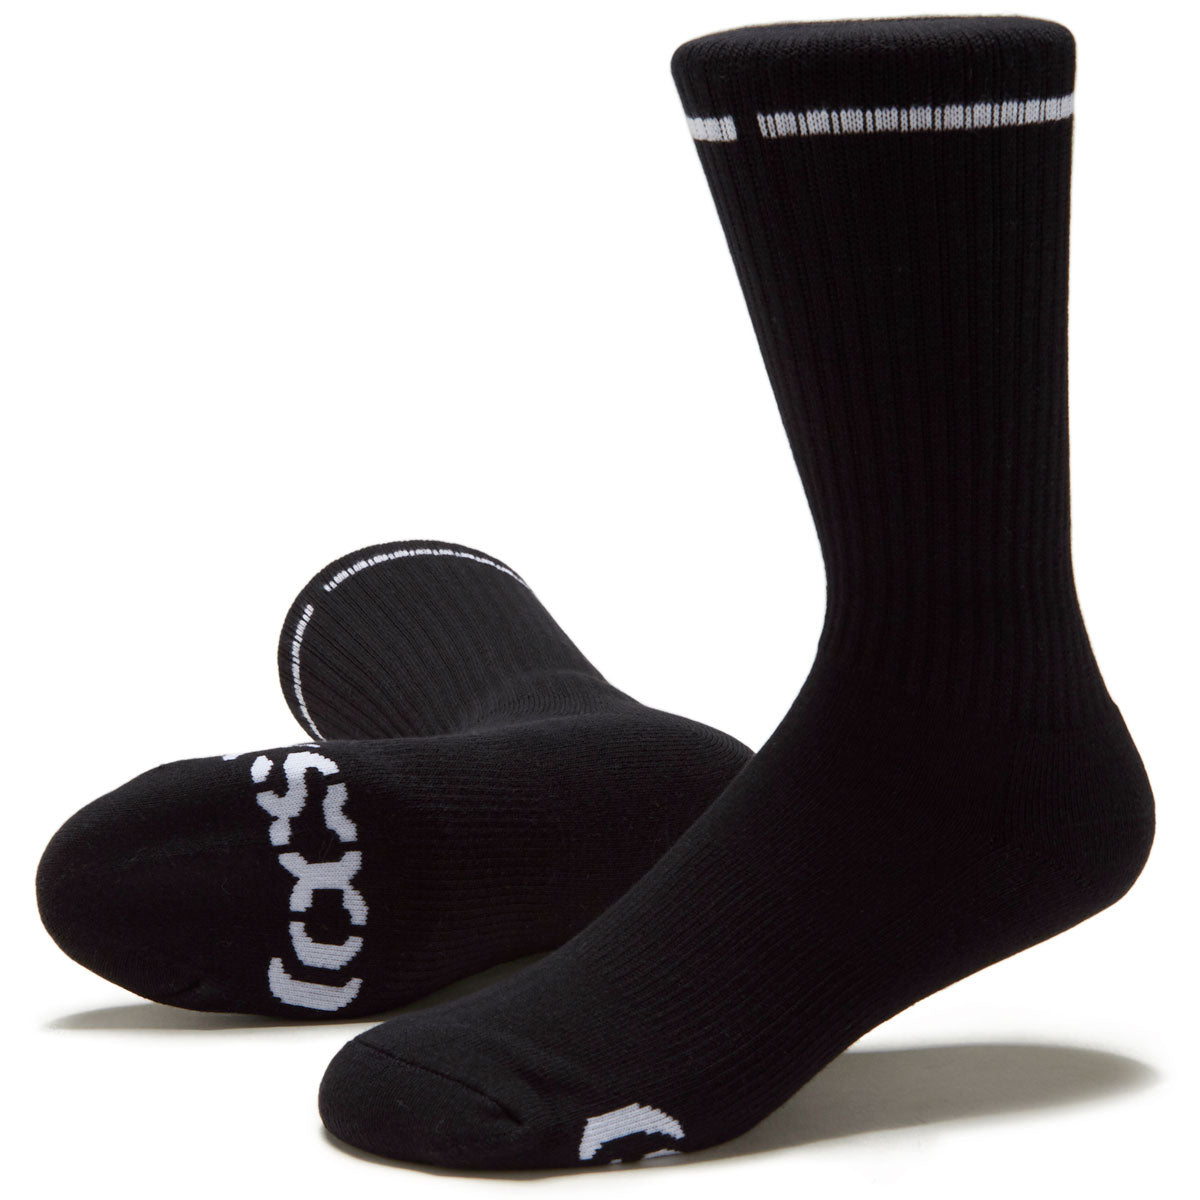 CCS Primary Socks - Black/White image 2